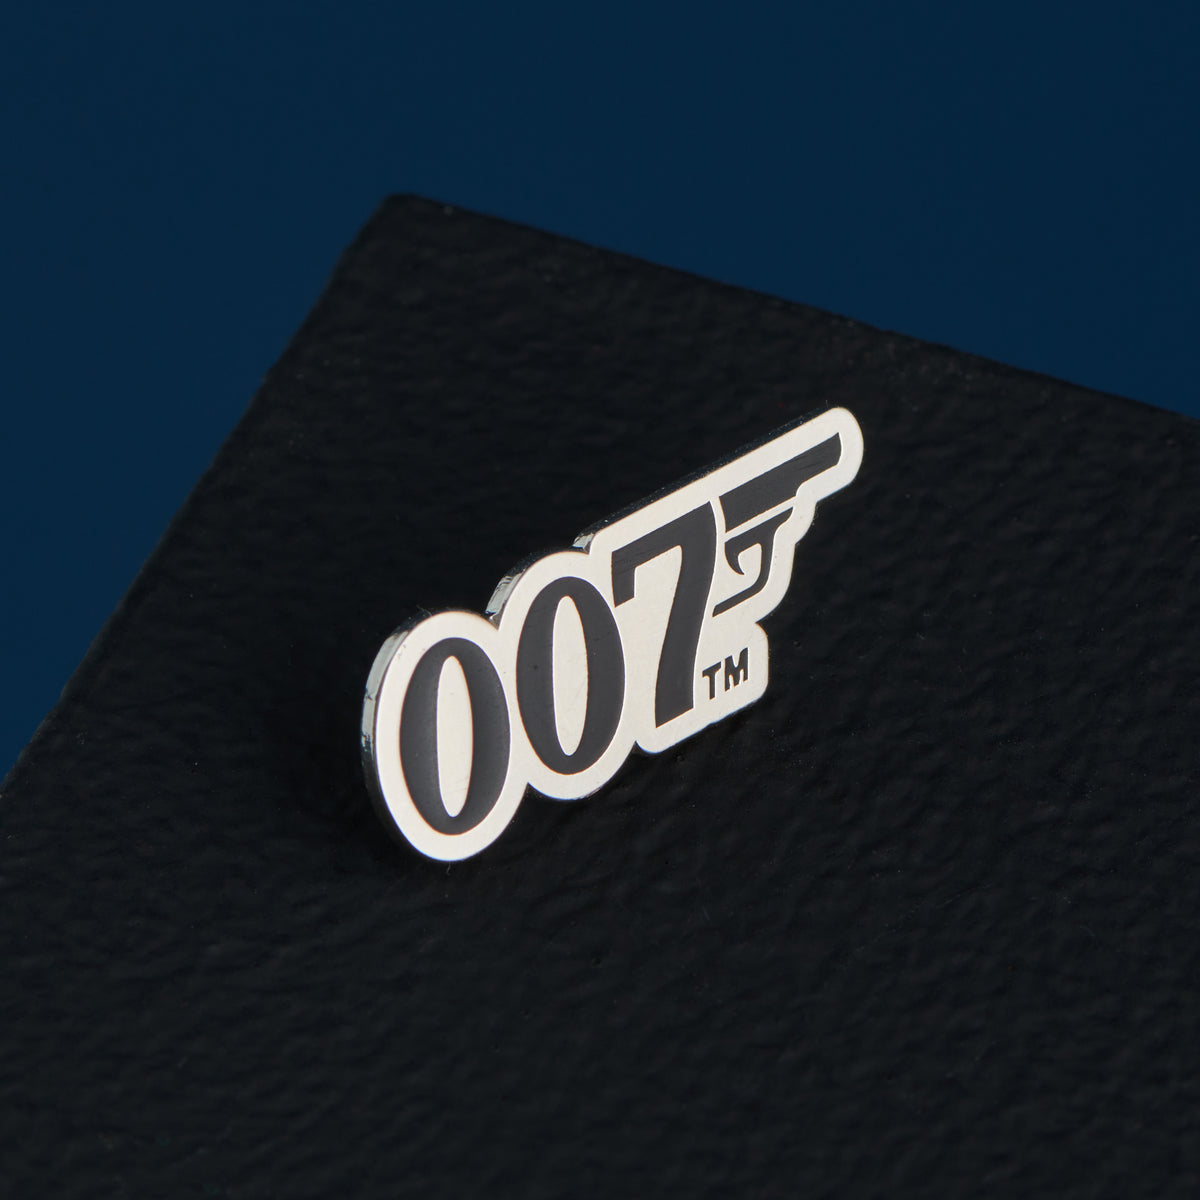 James Bond 007 Anstecker